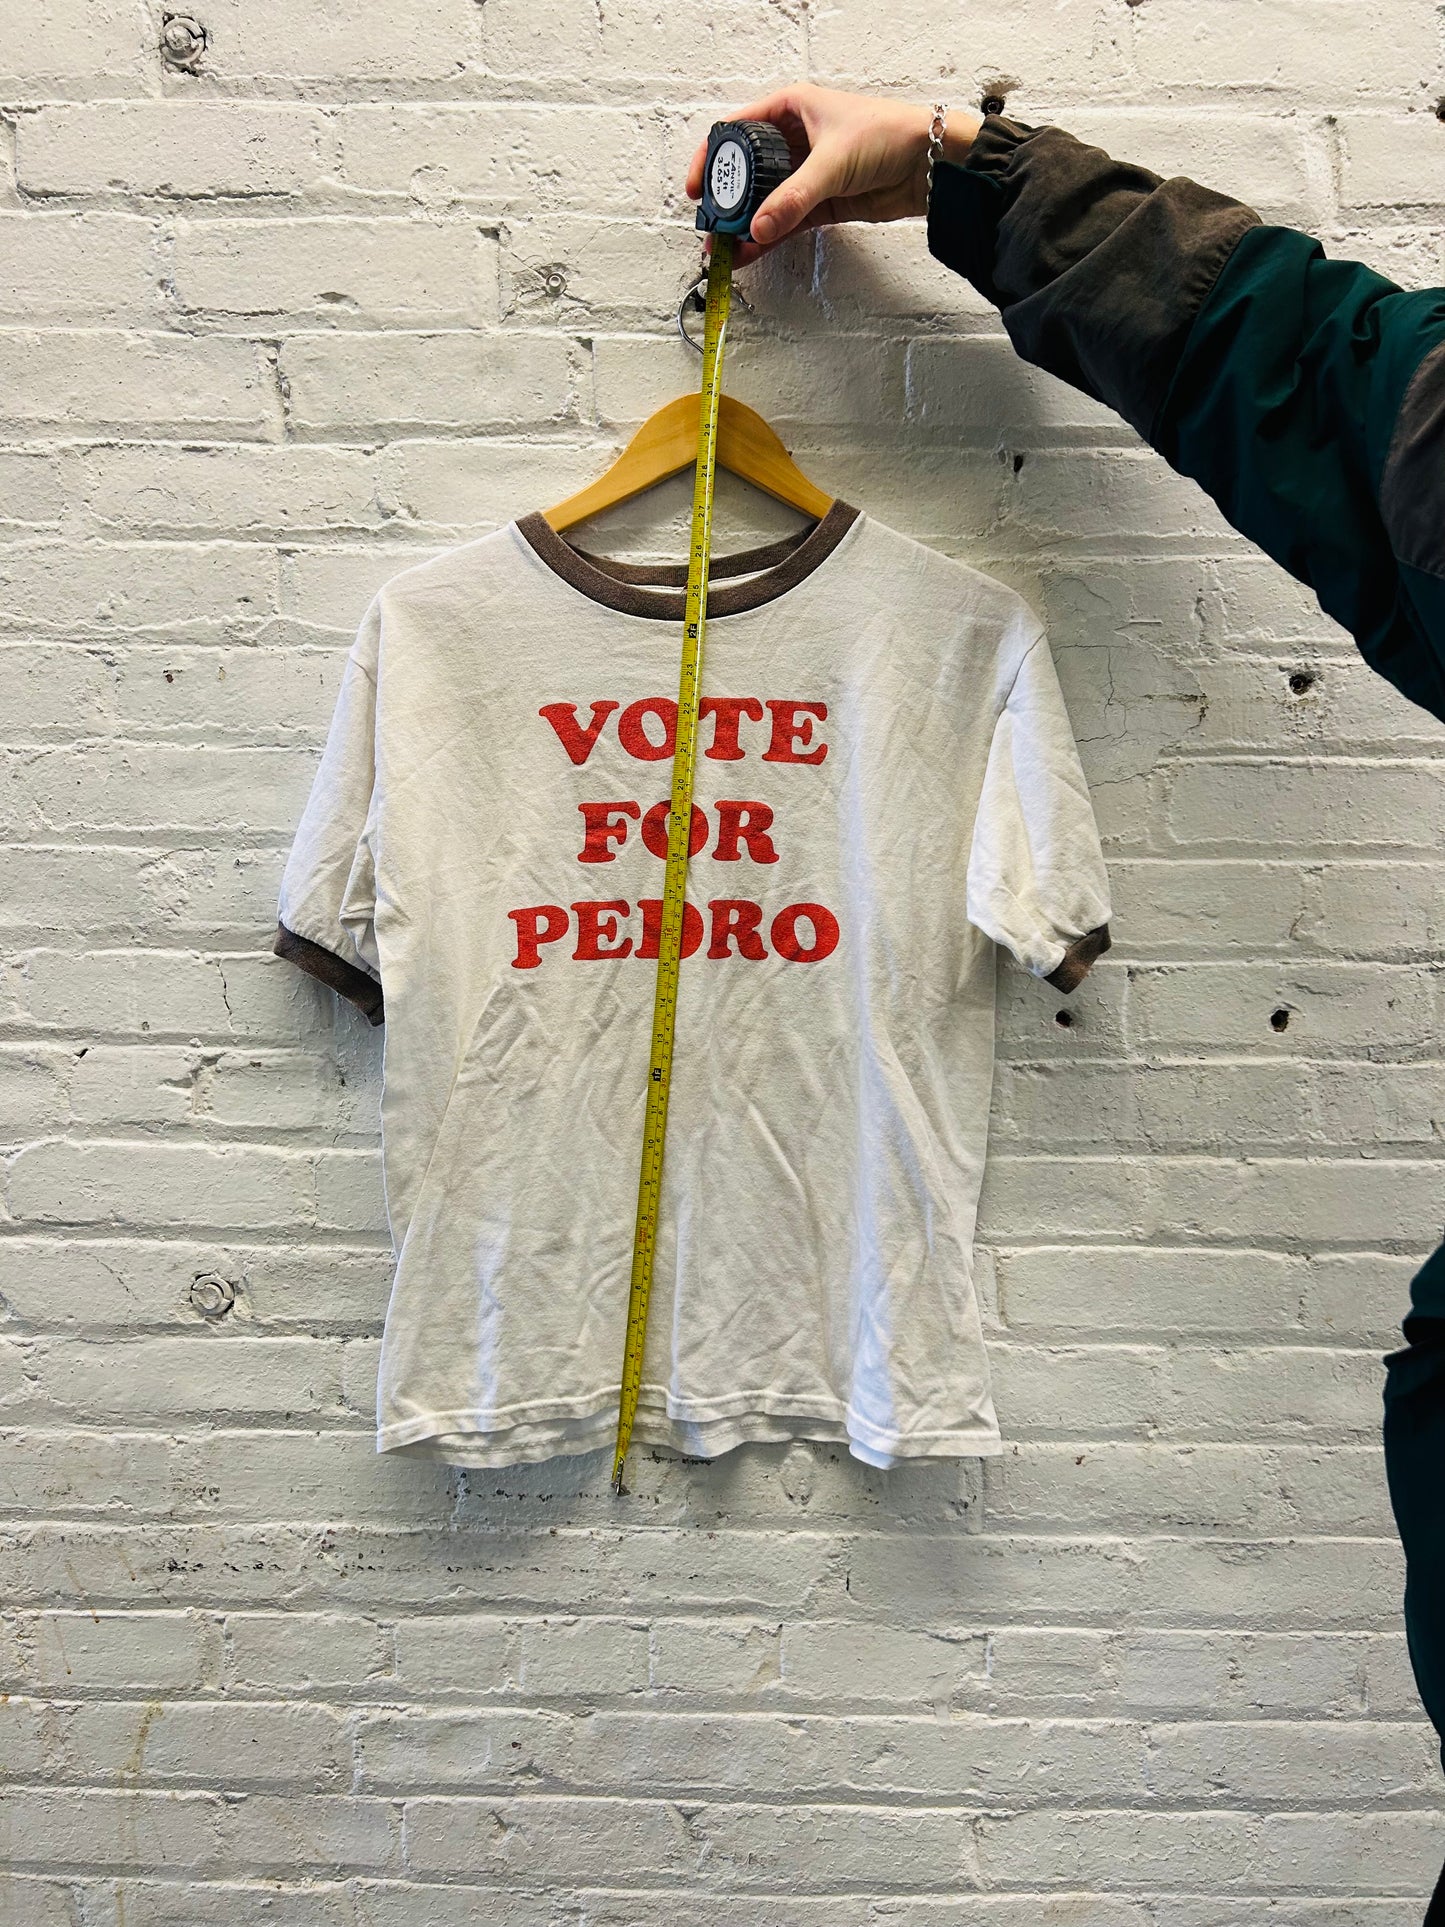 Napoleon Dynamite Vote for Pedro Tee - Medium